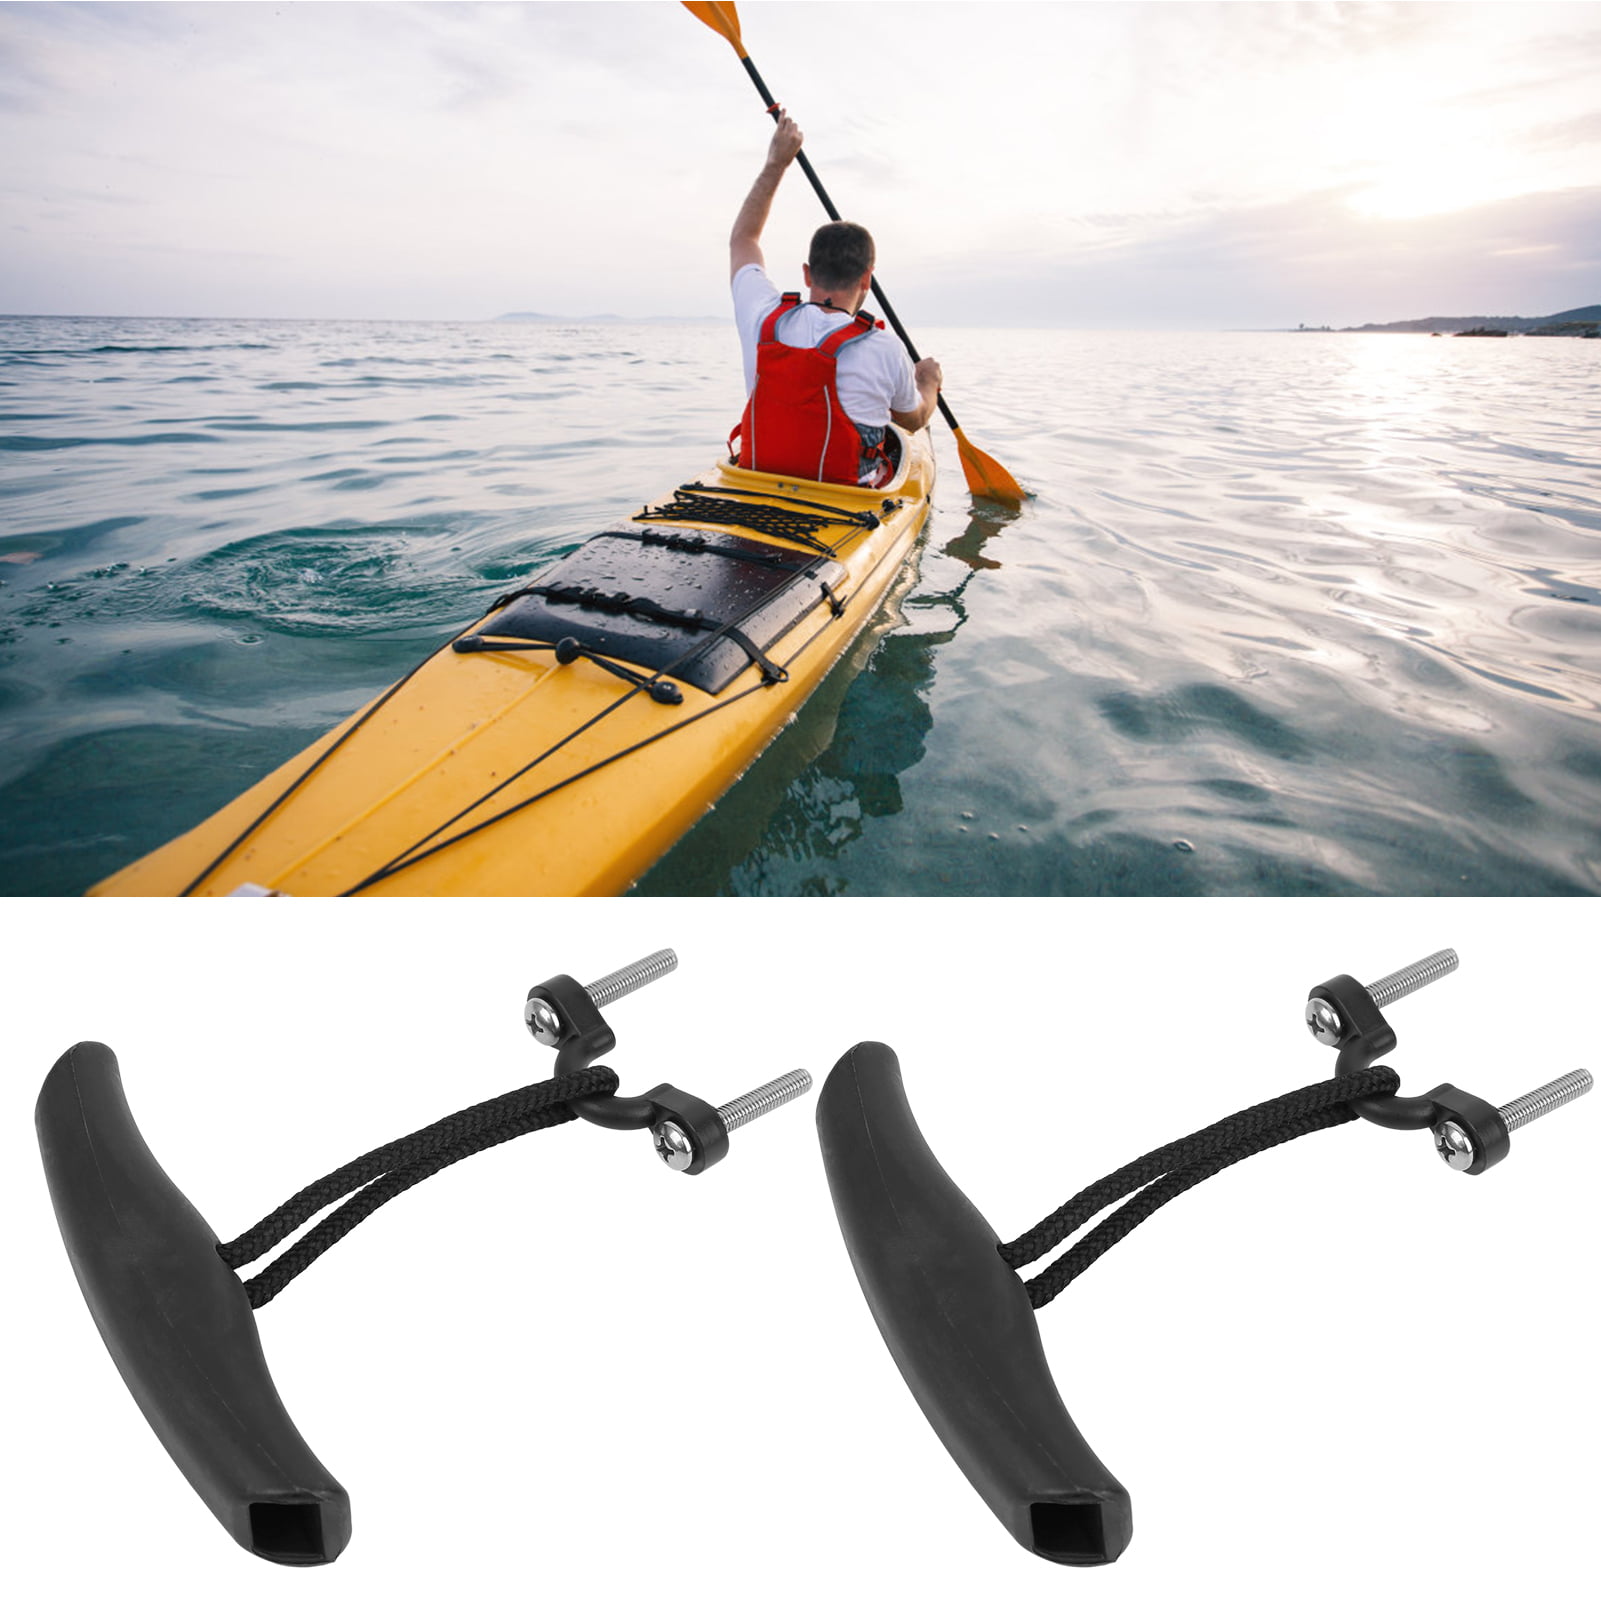 Utensi Handle Kayak Special Handle Cord Handle Practical Useful For Outdoor Acc 